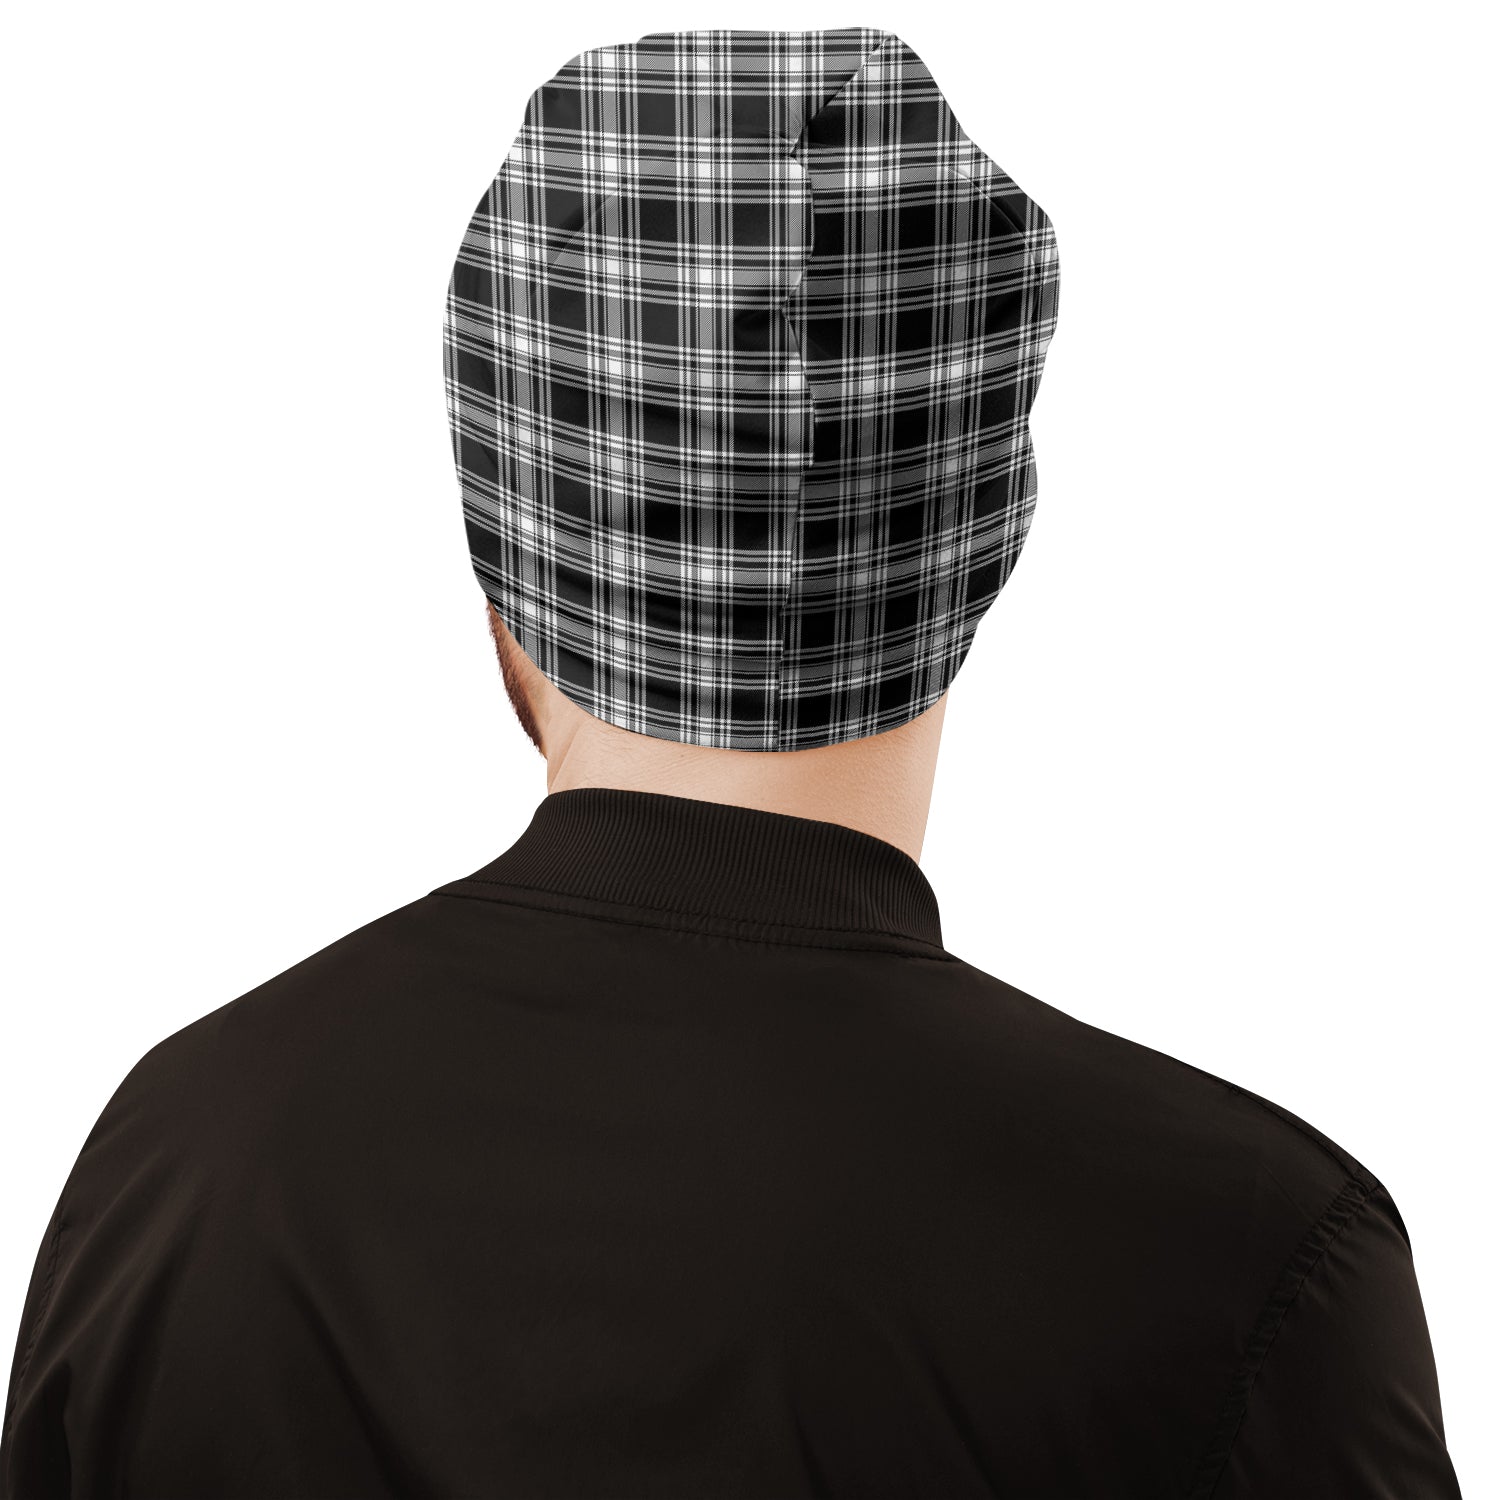 menzies-black-and-white-tartan-beanies-hat